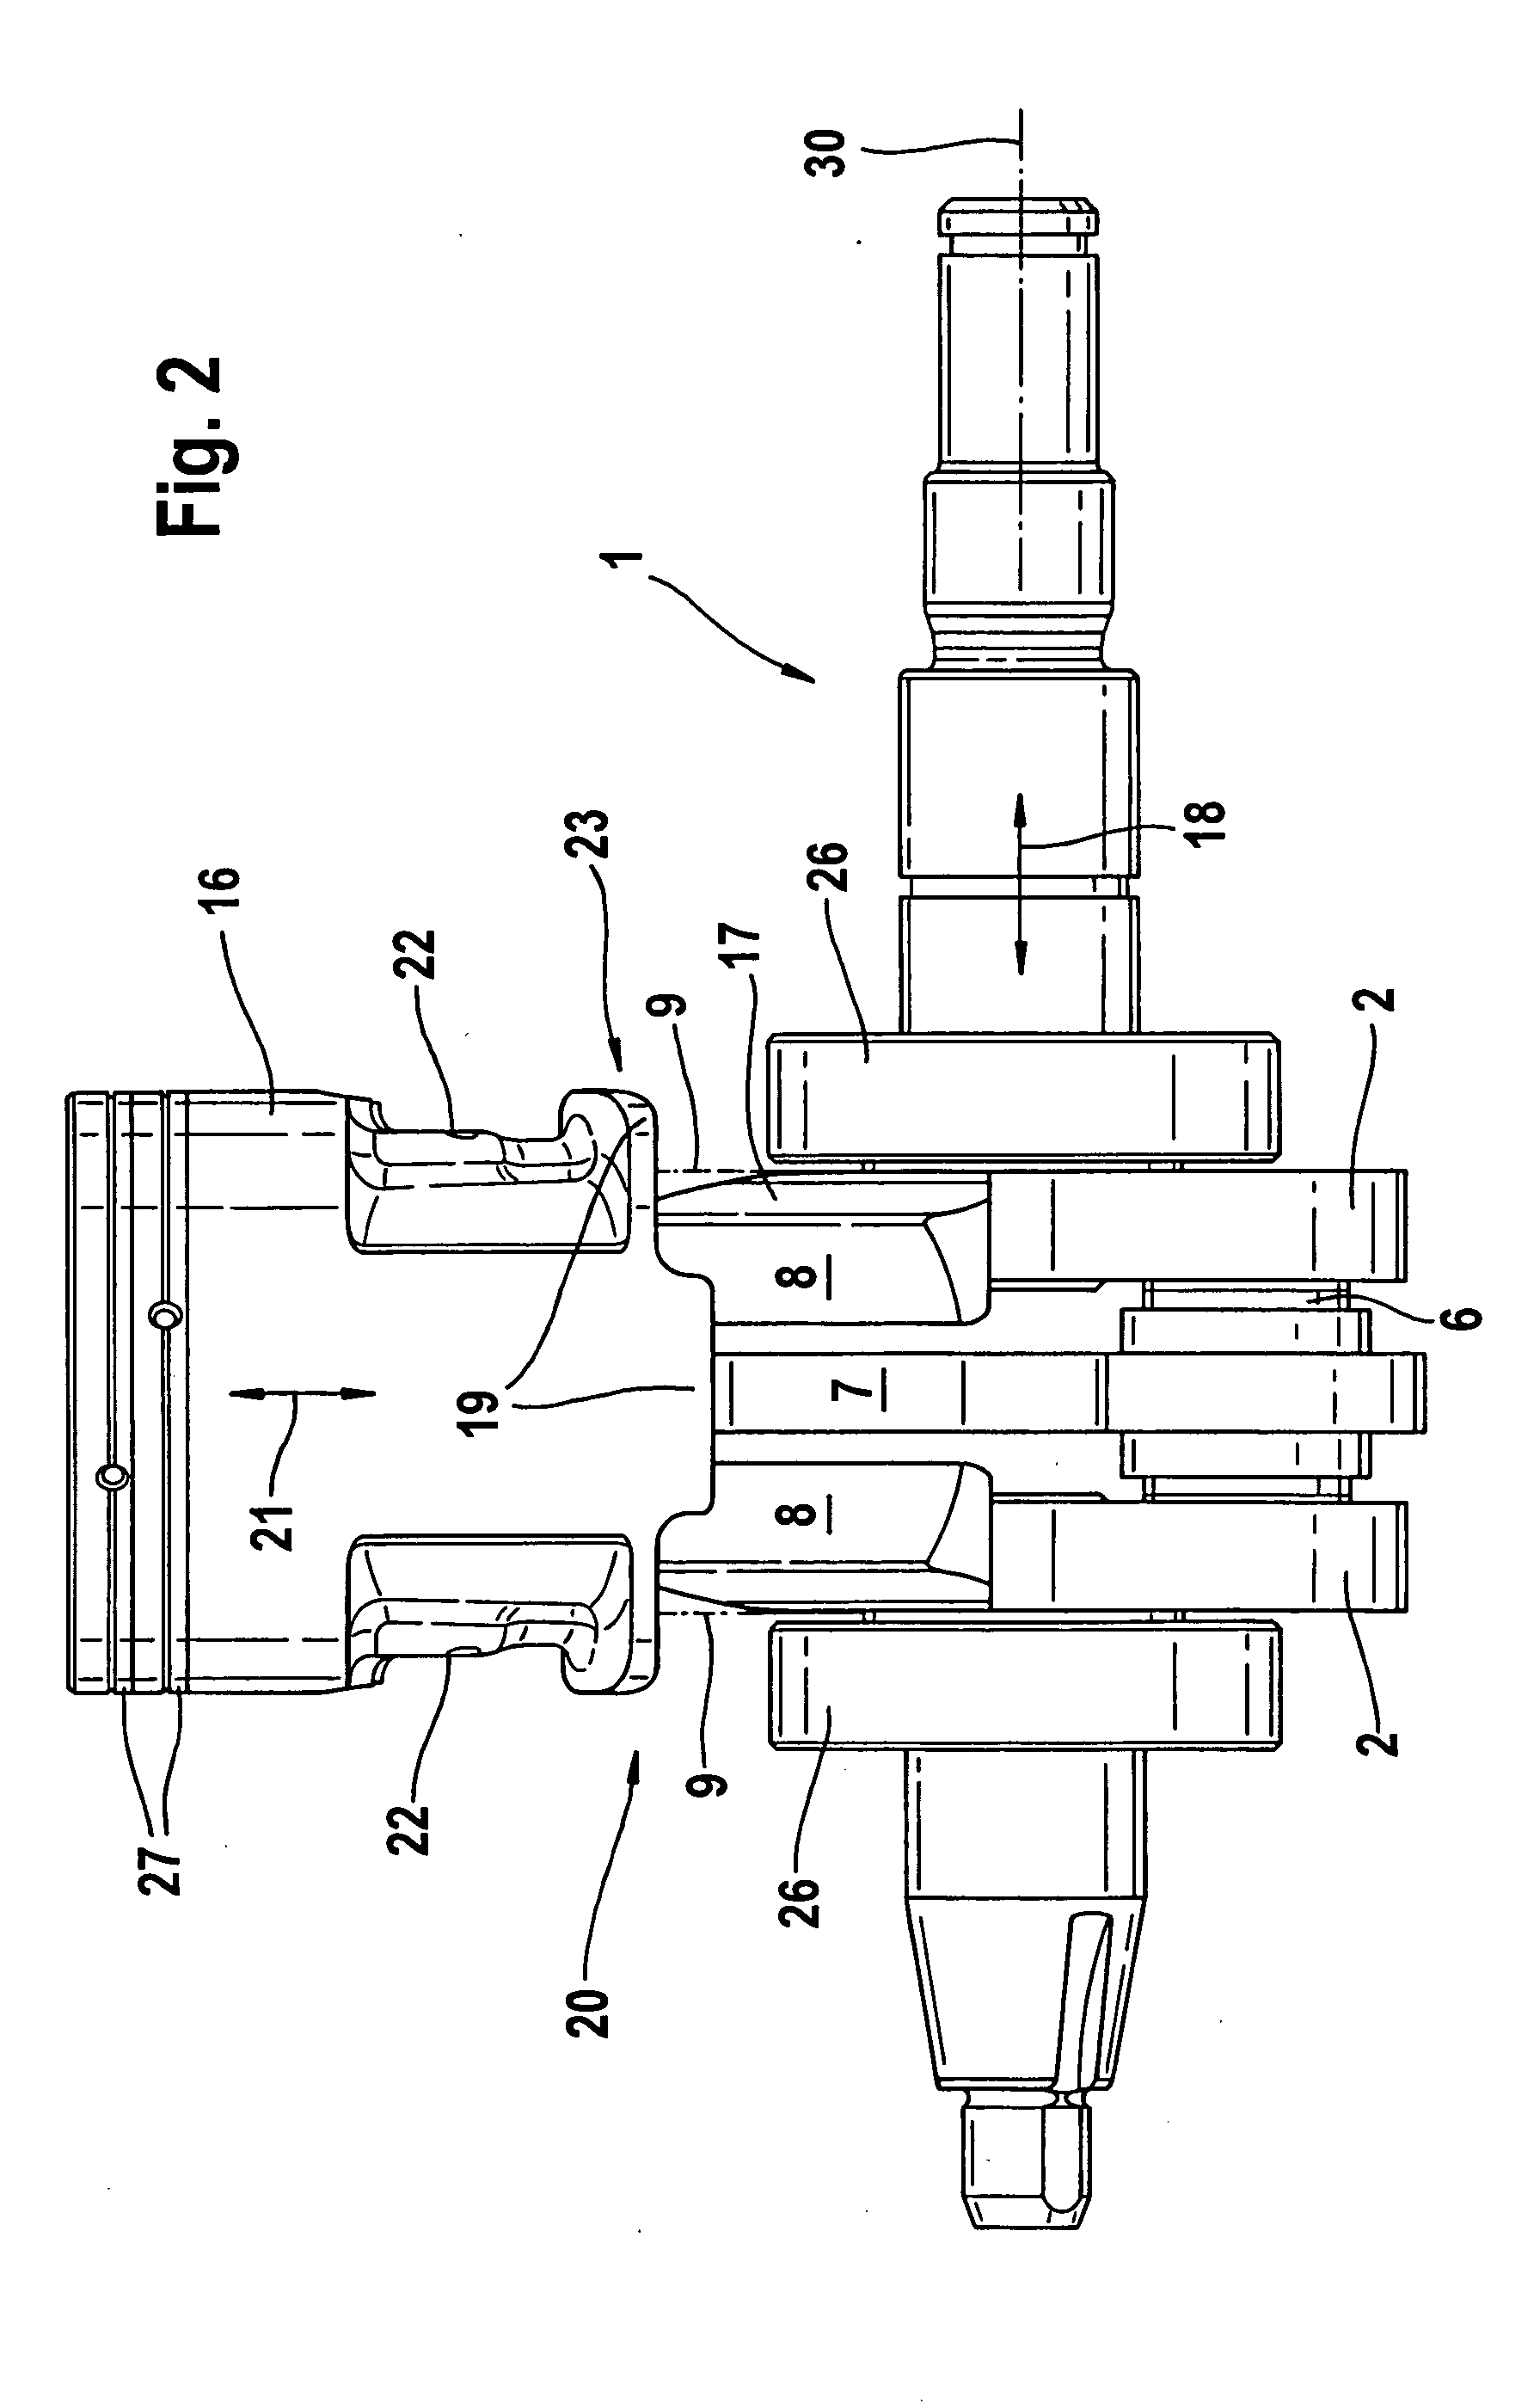 Crankshaft assembly of an internal combustion engine